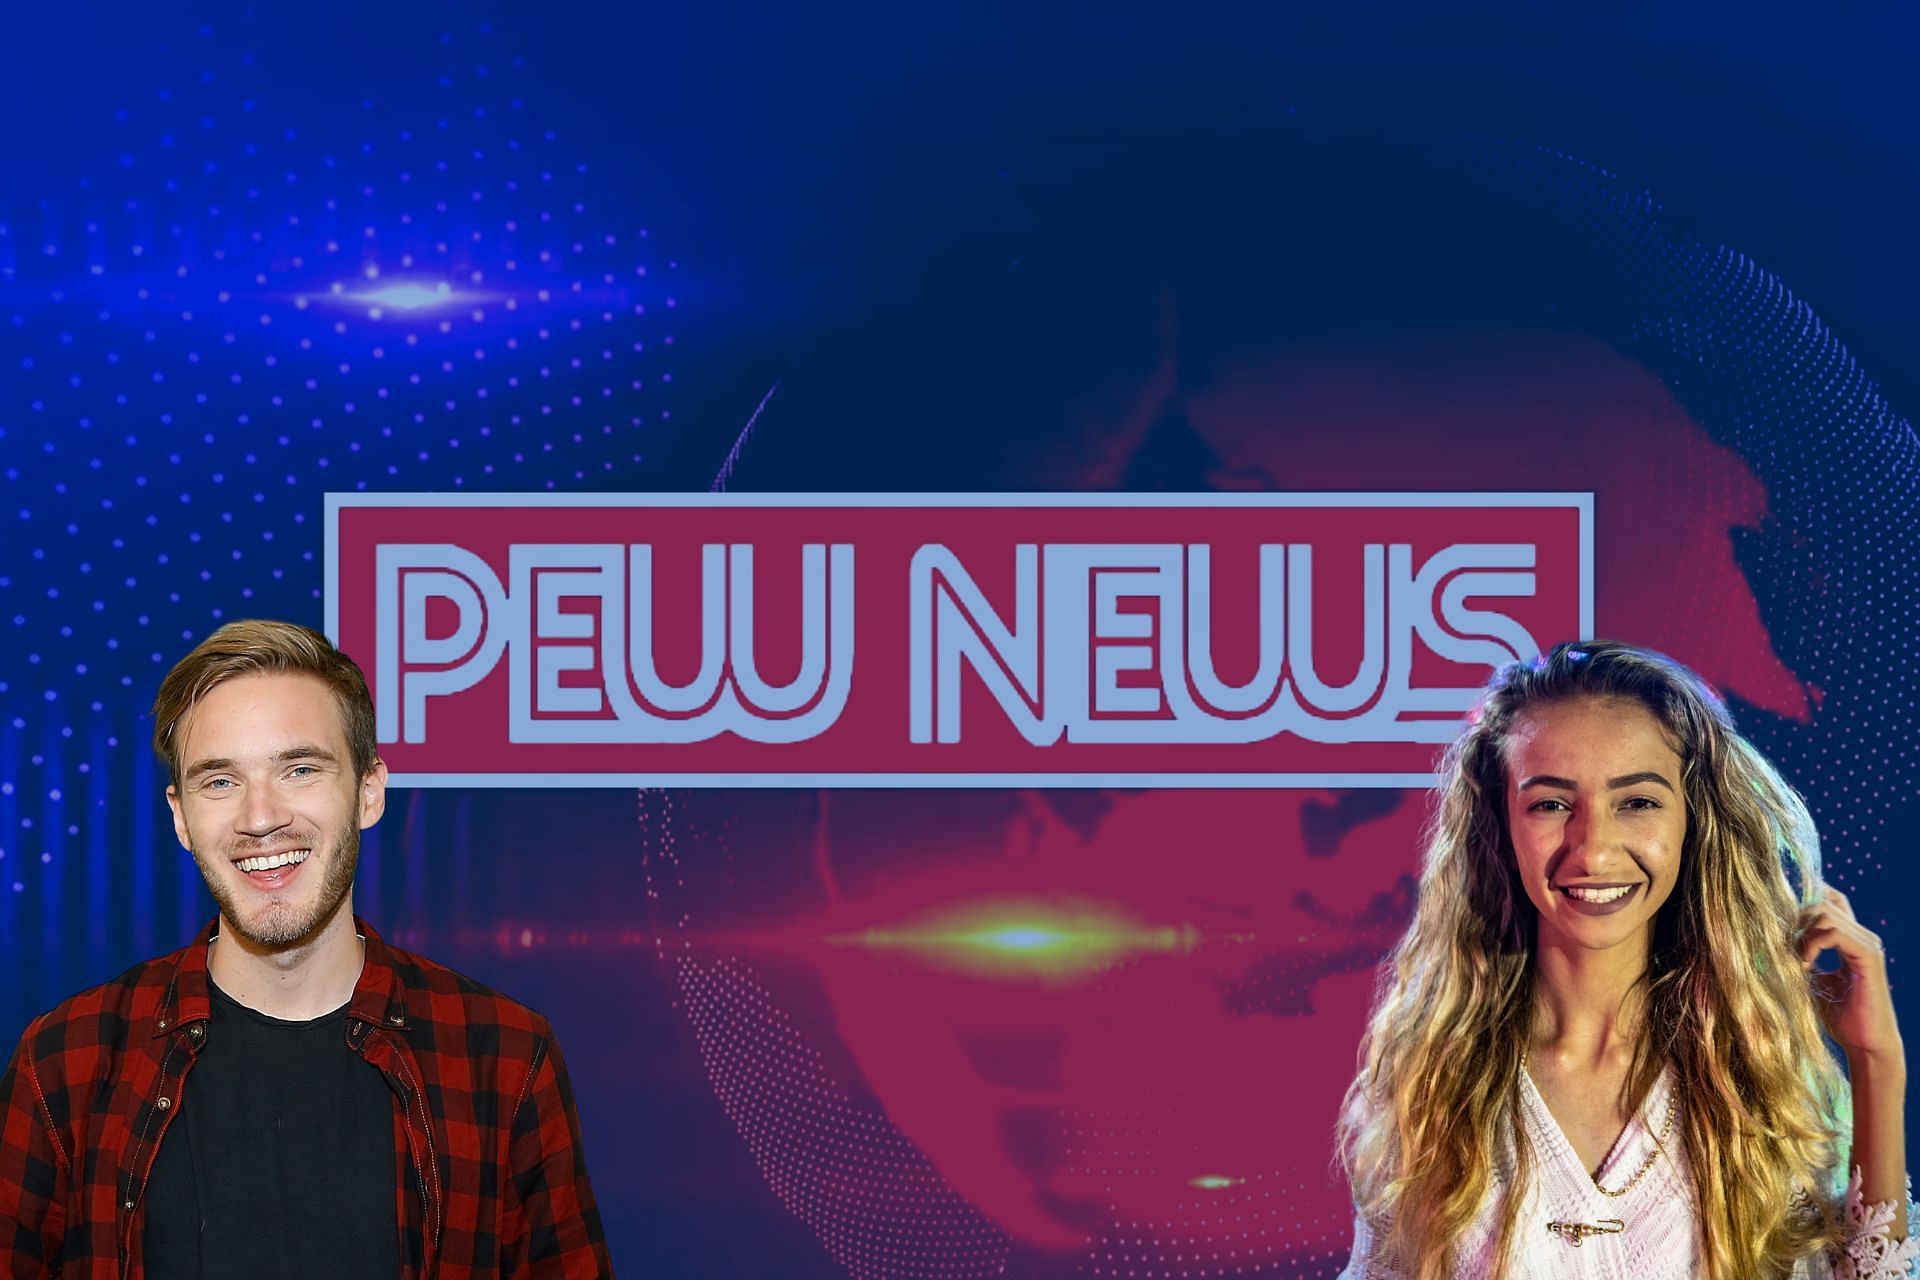 Pew News is rumoured to return (Image via Sportskeeda)